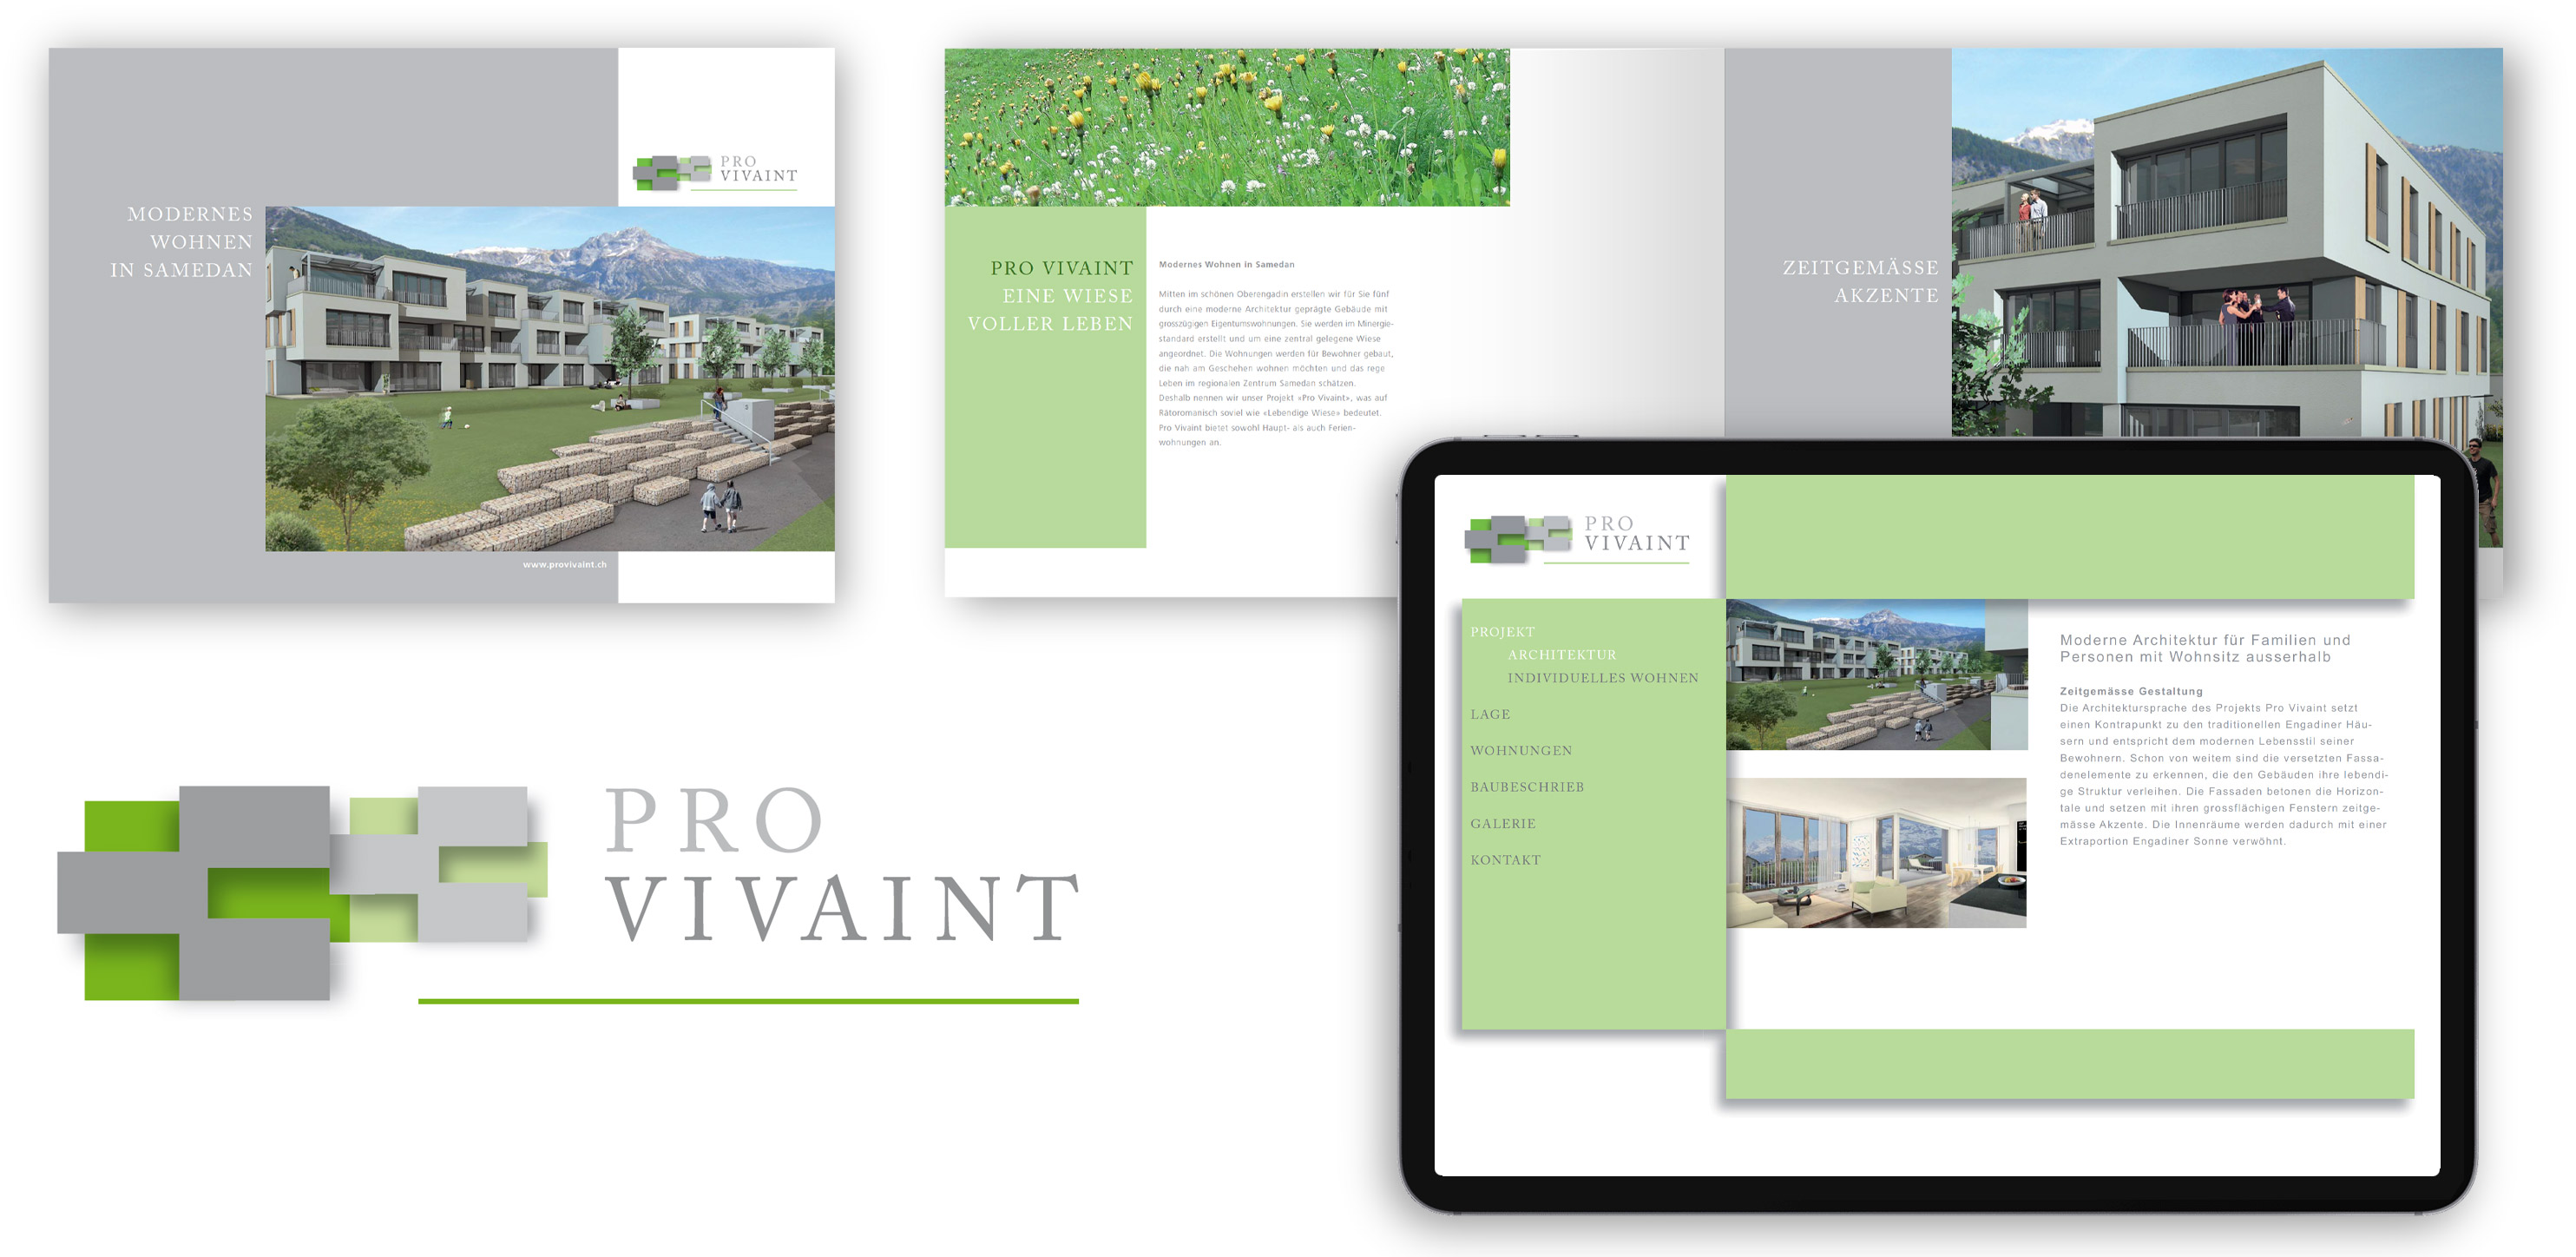 Corporate Design, Wohnbauprojekt «Pro Vivaint» Samedan - Atelier Leuthold, Visuelle Kommunikation, Grafik Design, Zürich